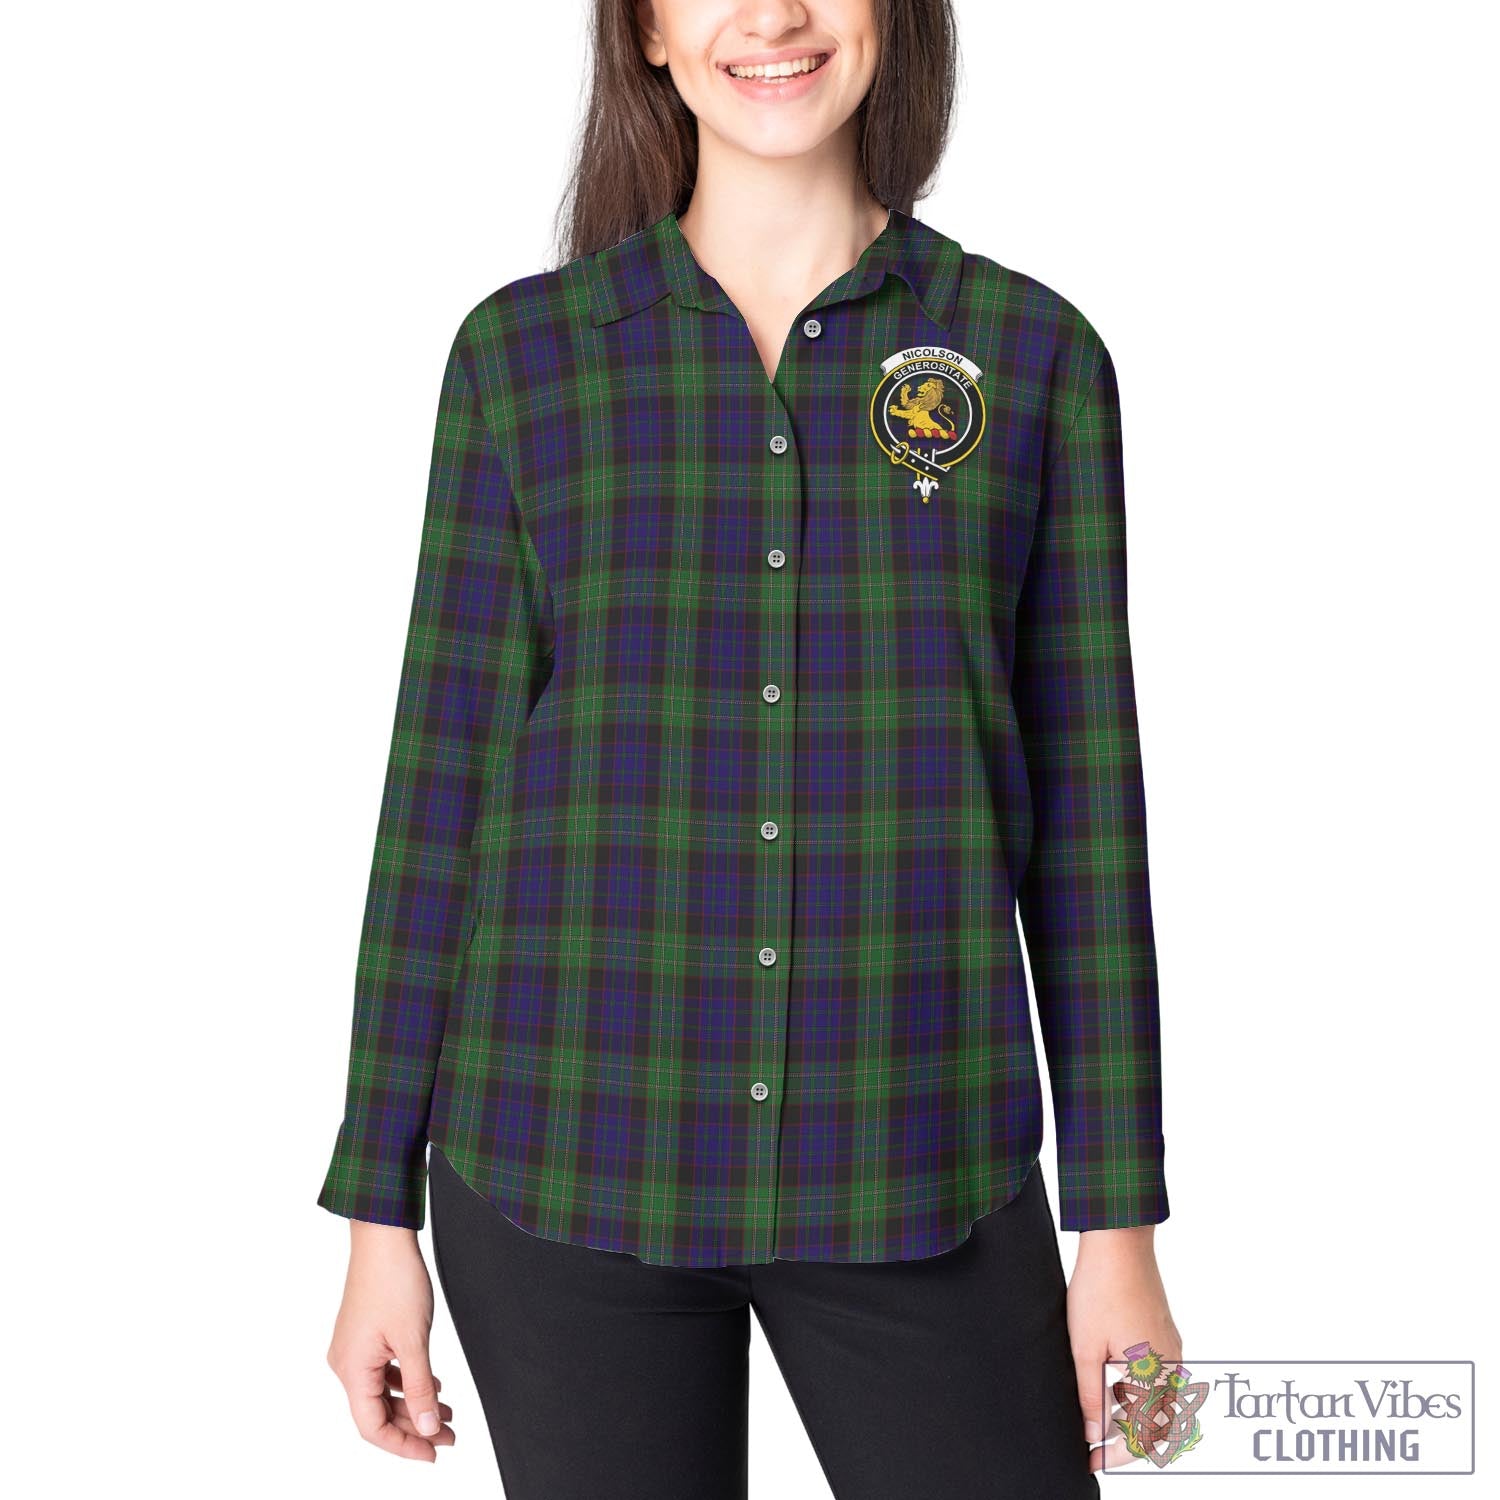 Tartan Vibes Clothing Nicolson Green Hunting Tartan Womens Casual Shirt with Family Crest